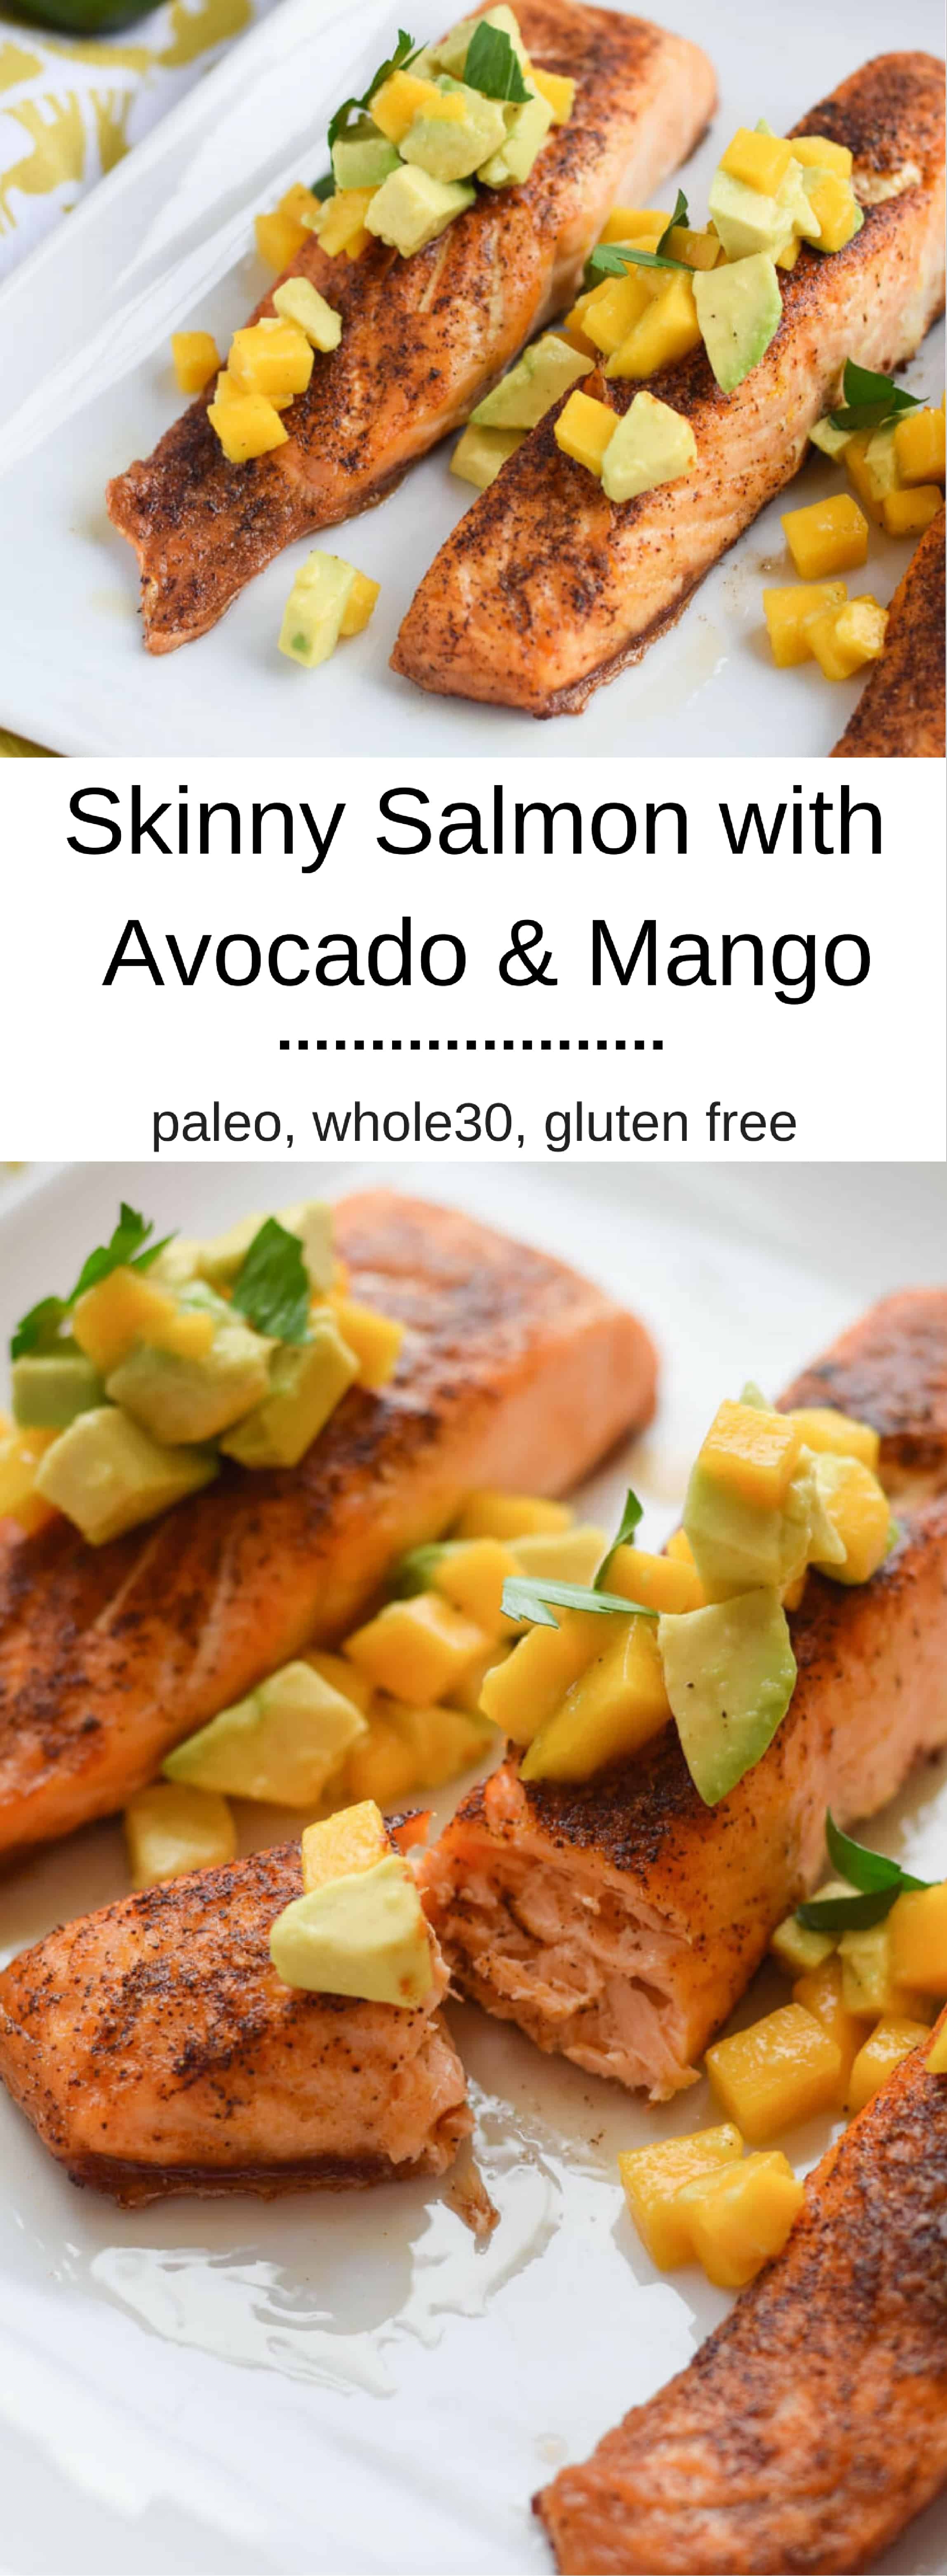 Skinny Salmon with Avocado and Mango